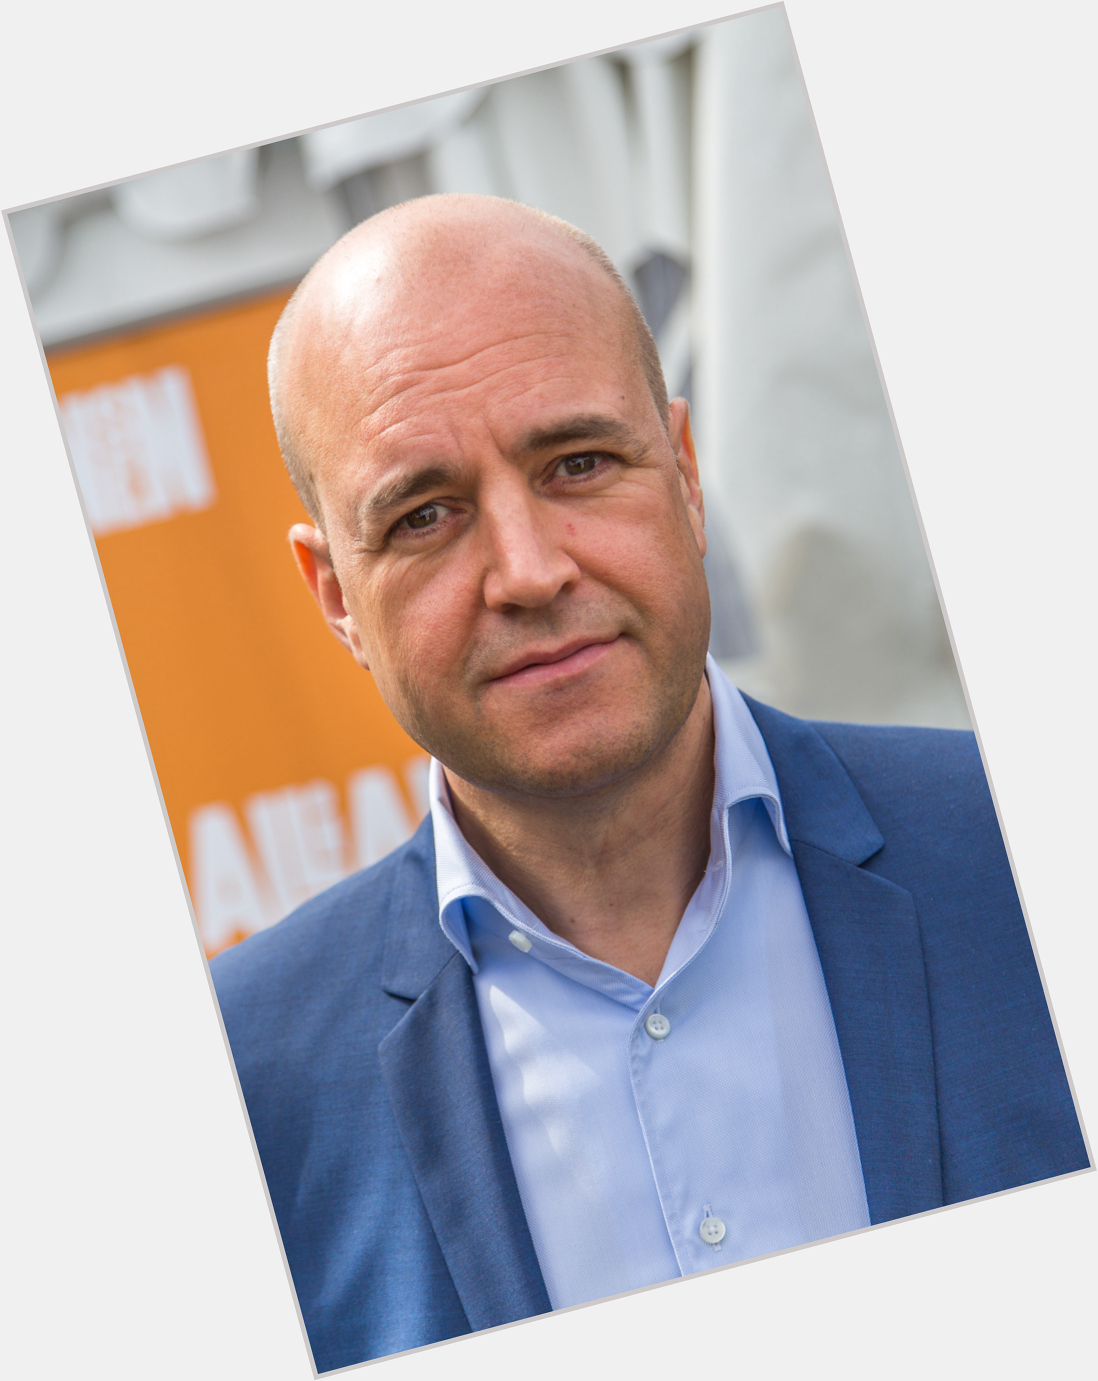 Fredrik Reinfeldt exclusive hot pic 3